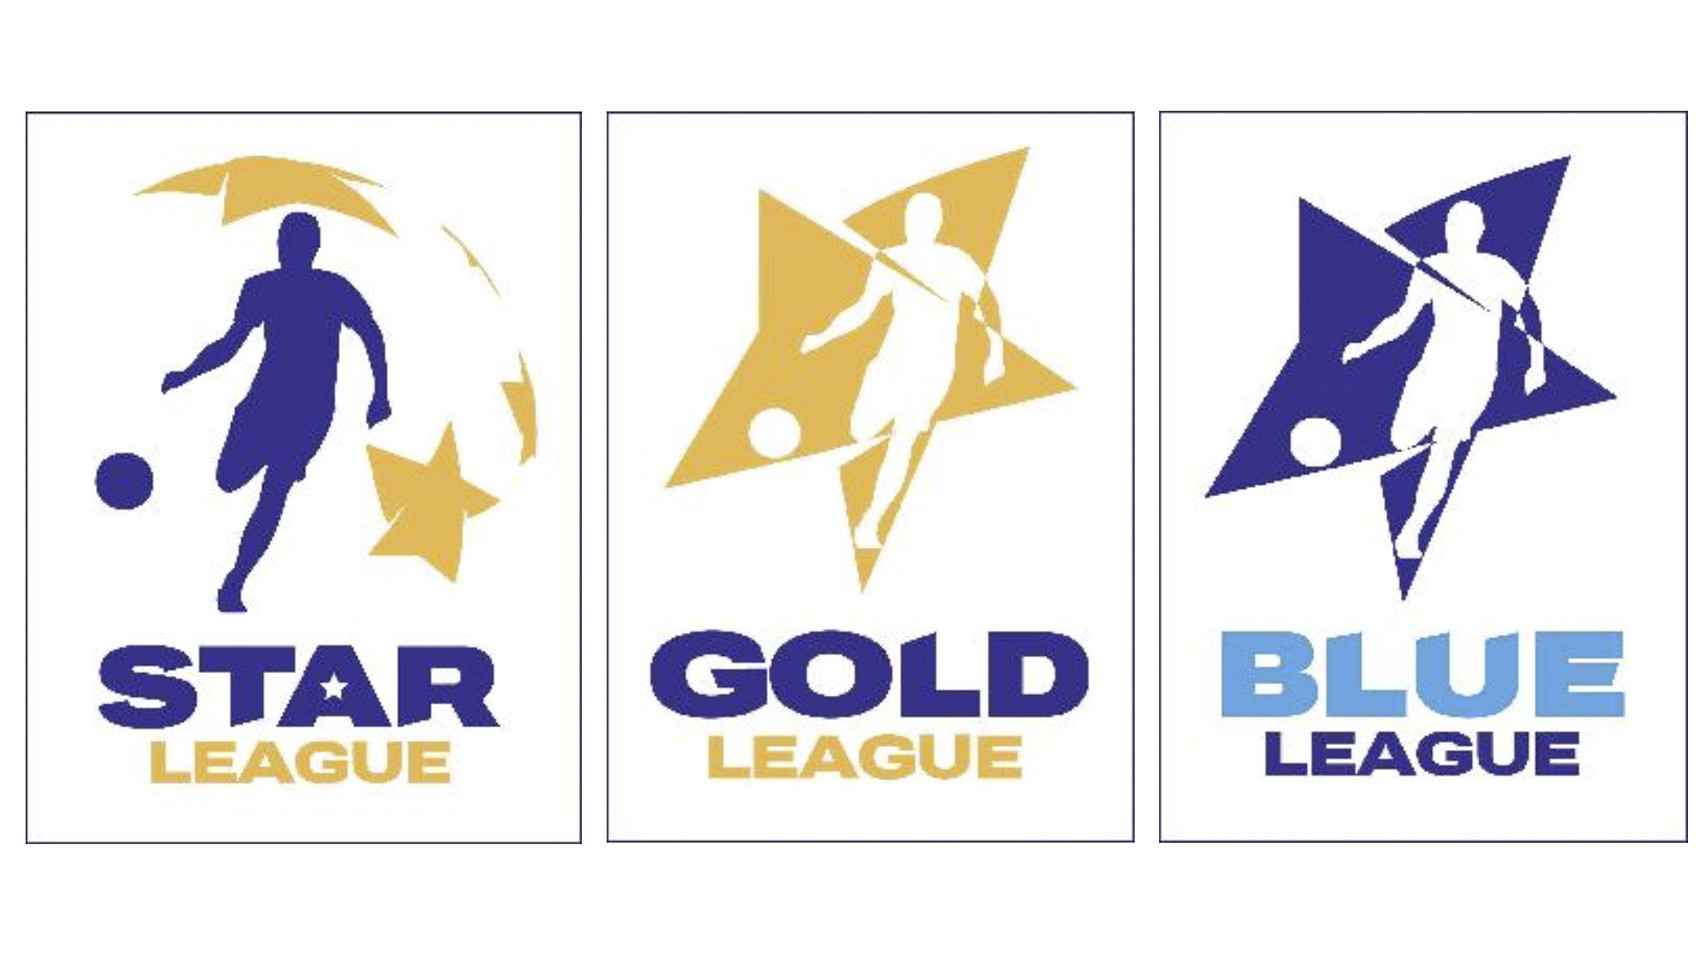 Star League, Gold League y Blue League, las divisiones de la Superliga